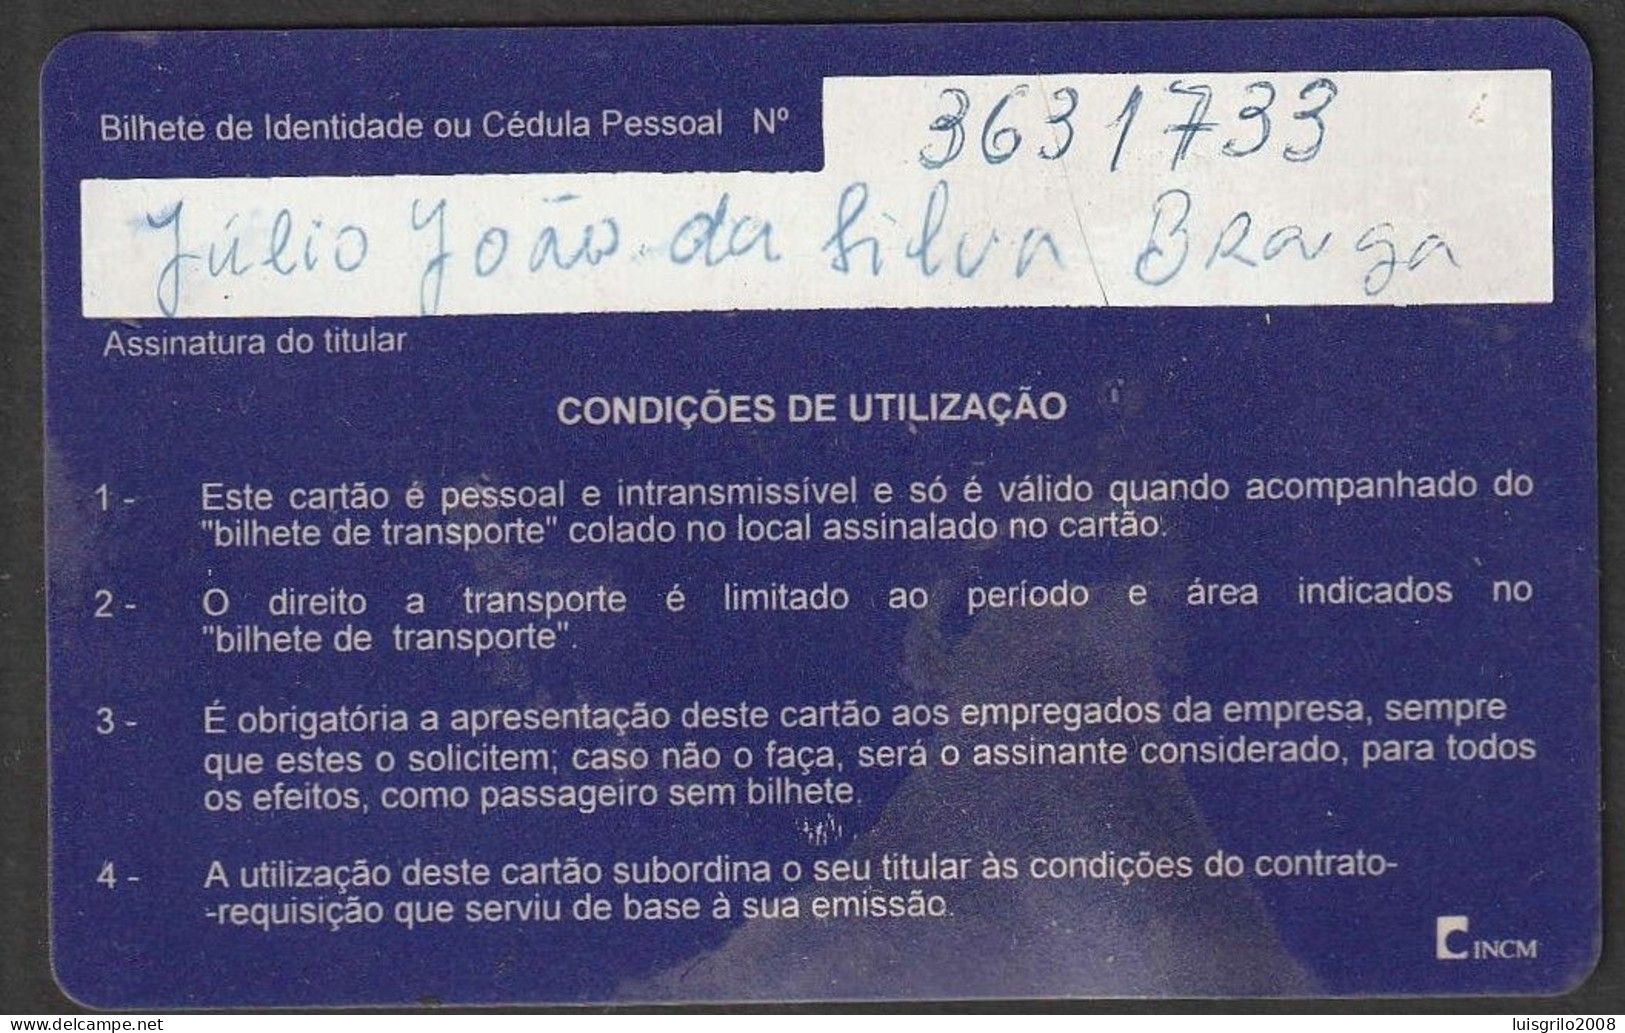 Portugal, PASSE 2001 - Passe Carris, Carris Lisboa -|- Avec Vignette Mensuell - Novembro 2001 - Europe